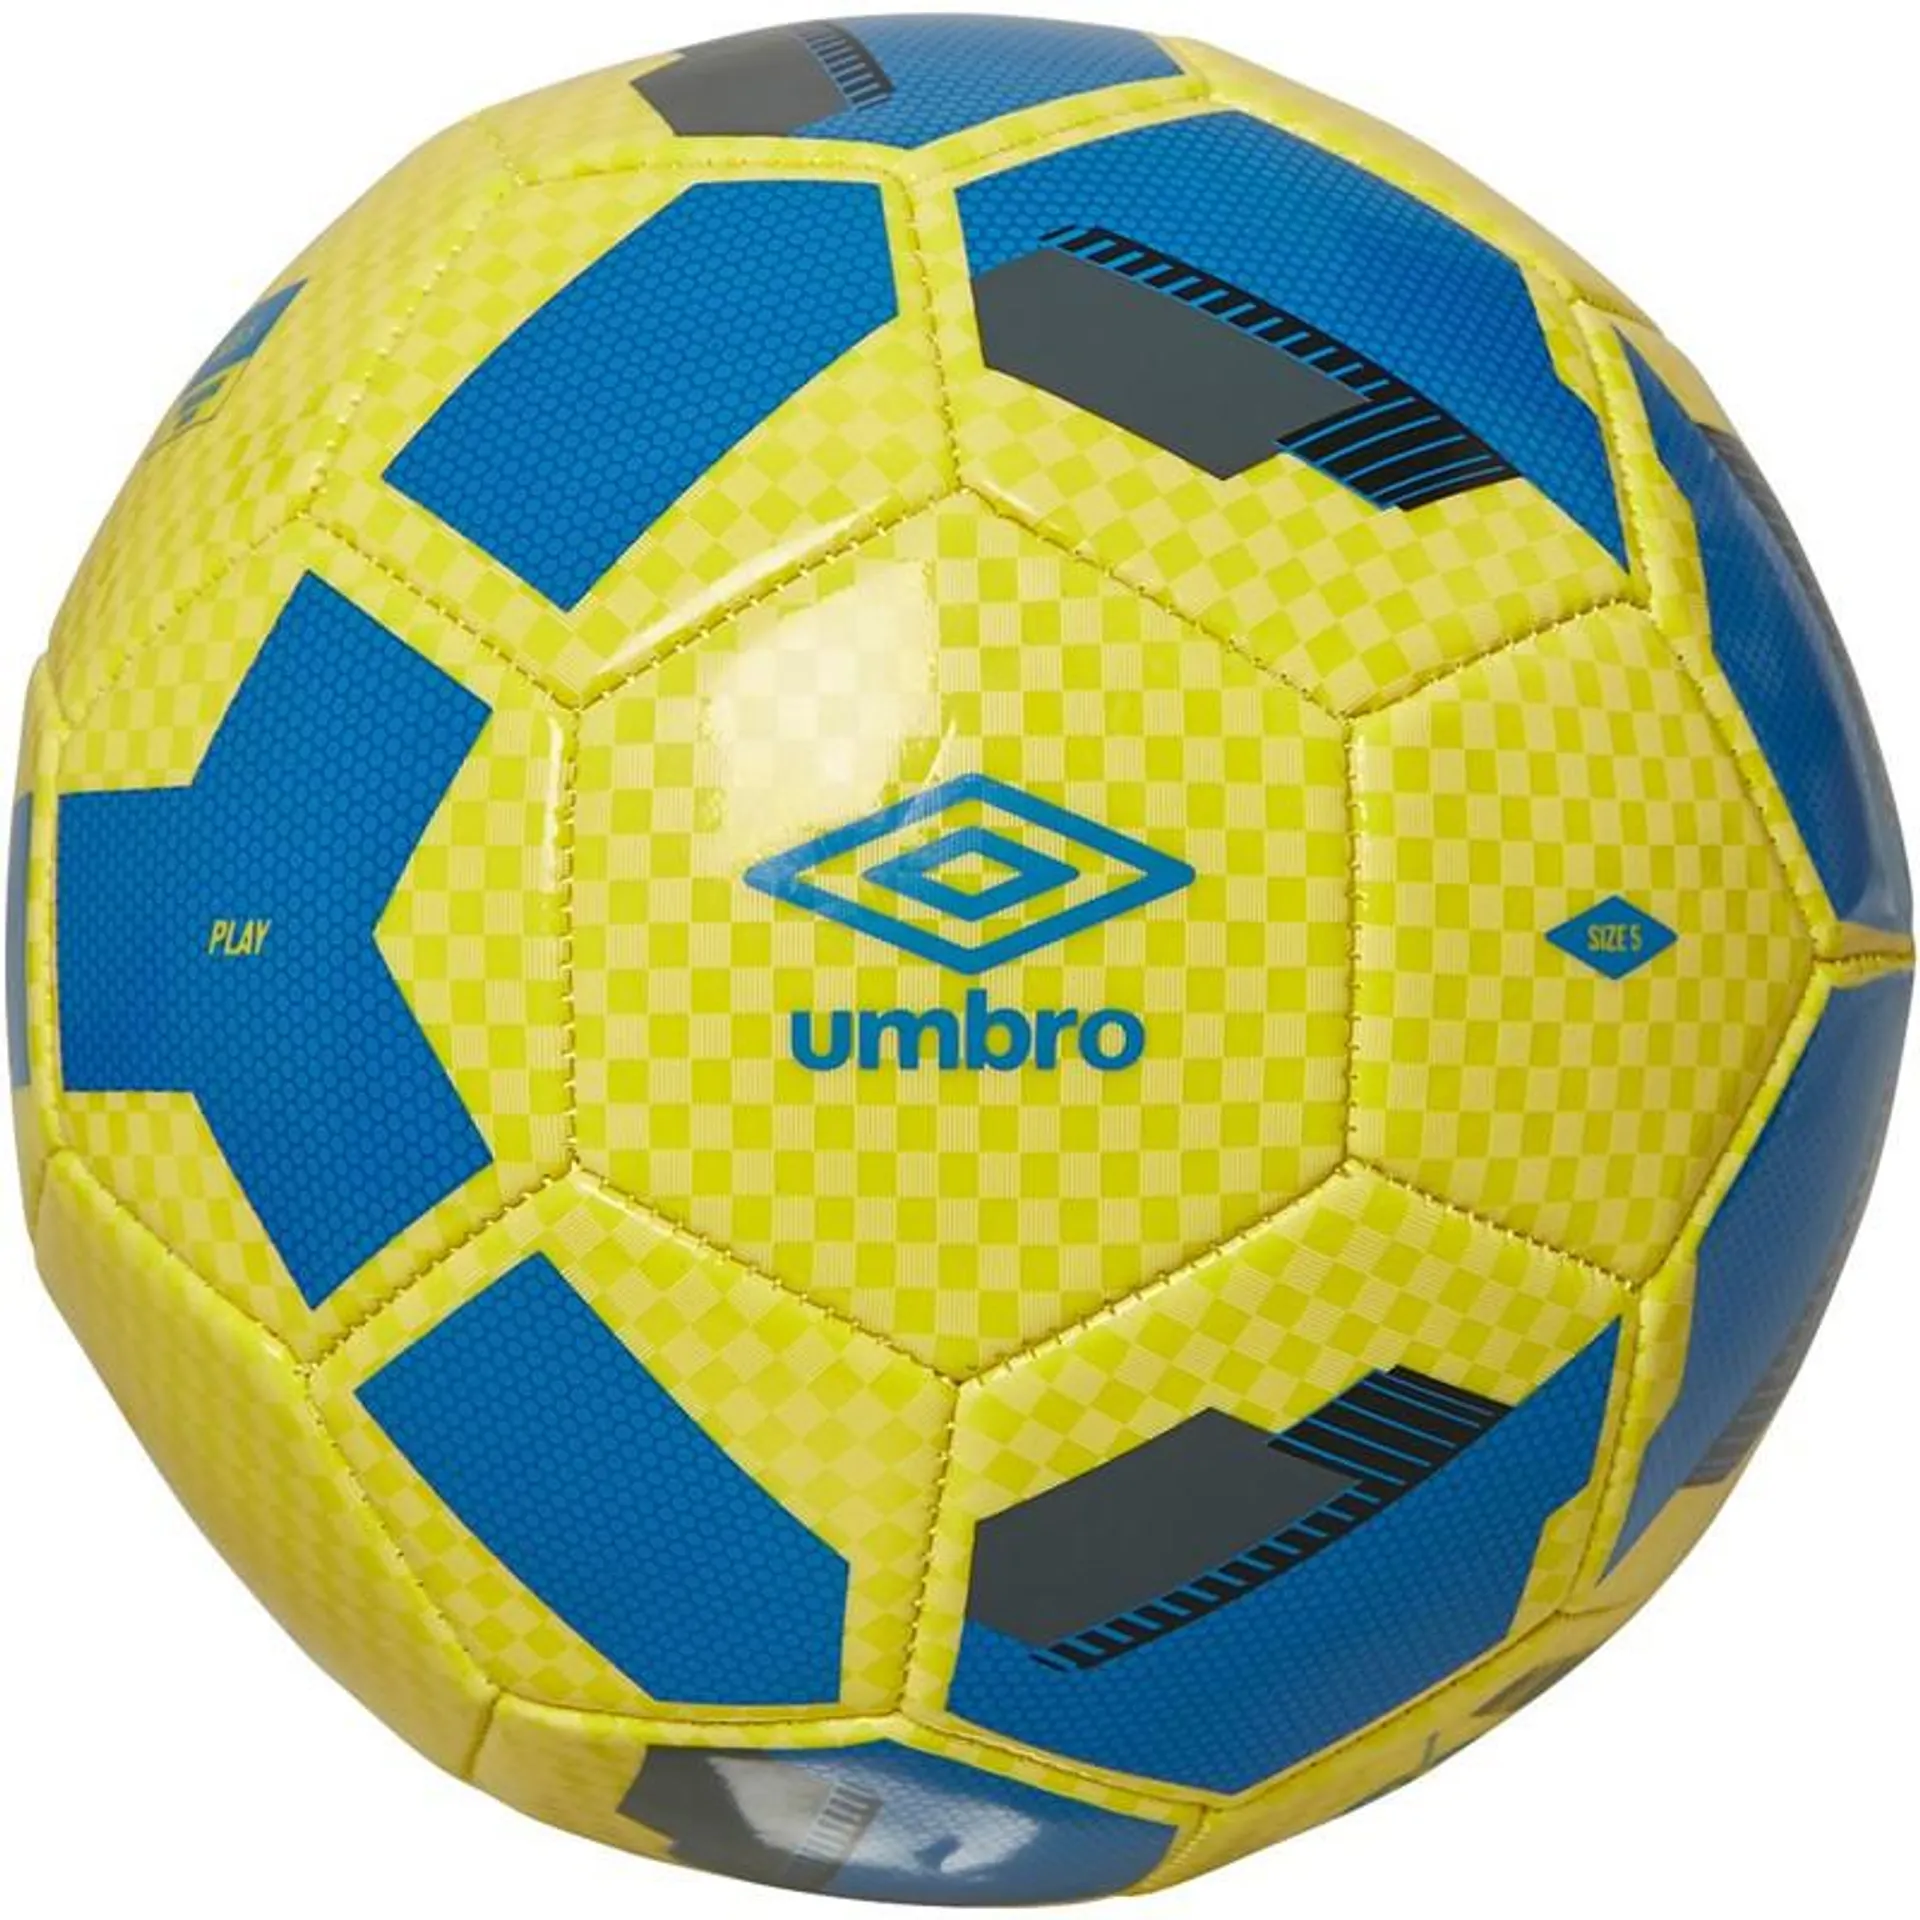 Umbro Play Training Football Yellow/Blue/Black/Grey